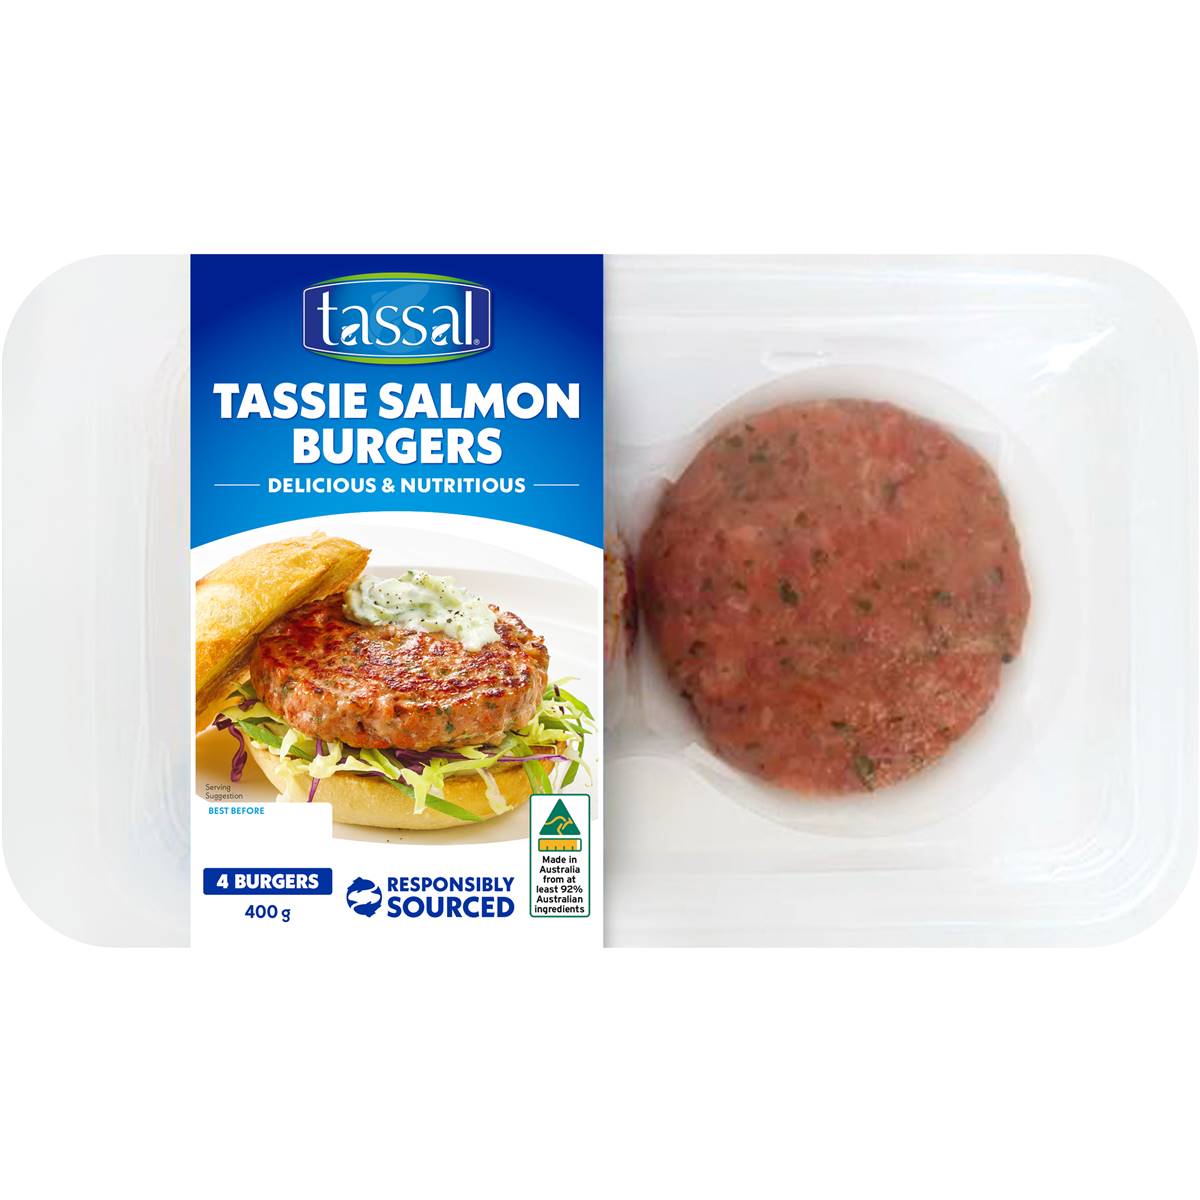 Calories in Tassal Tassie Salmon Burgers